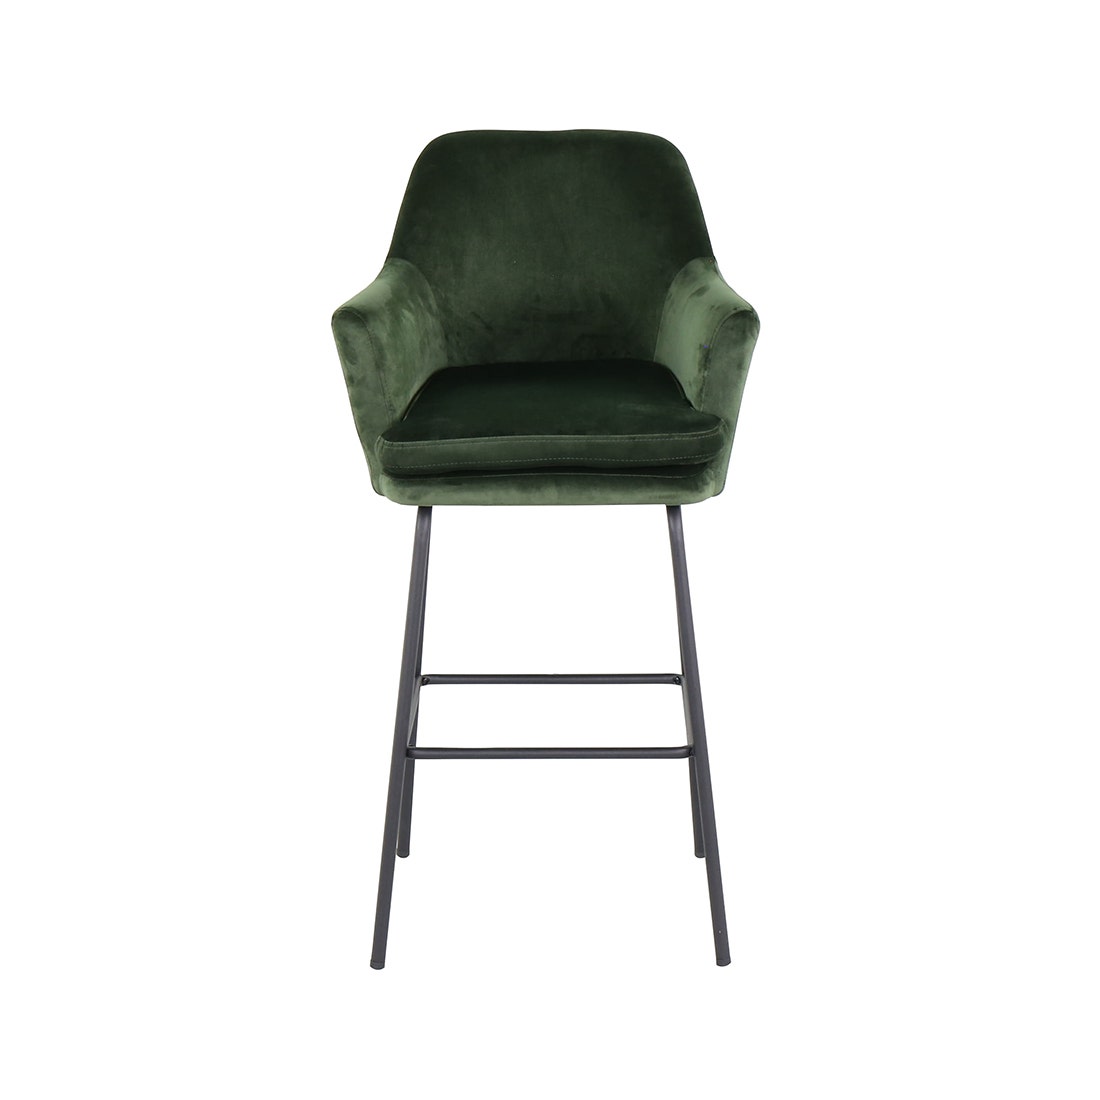 19202179-a-chisa-furniture-dining-room-bar-stools-counter-stools-01